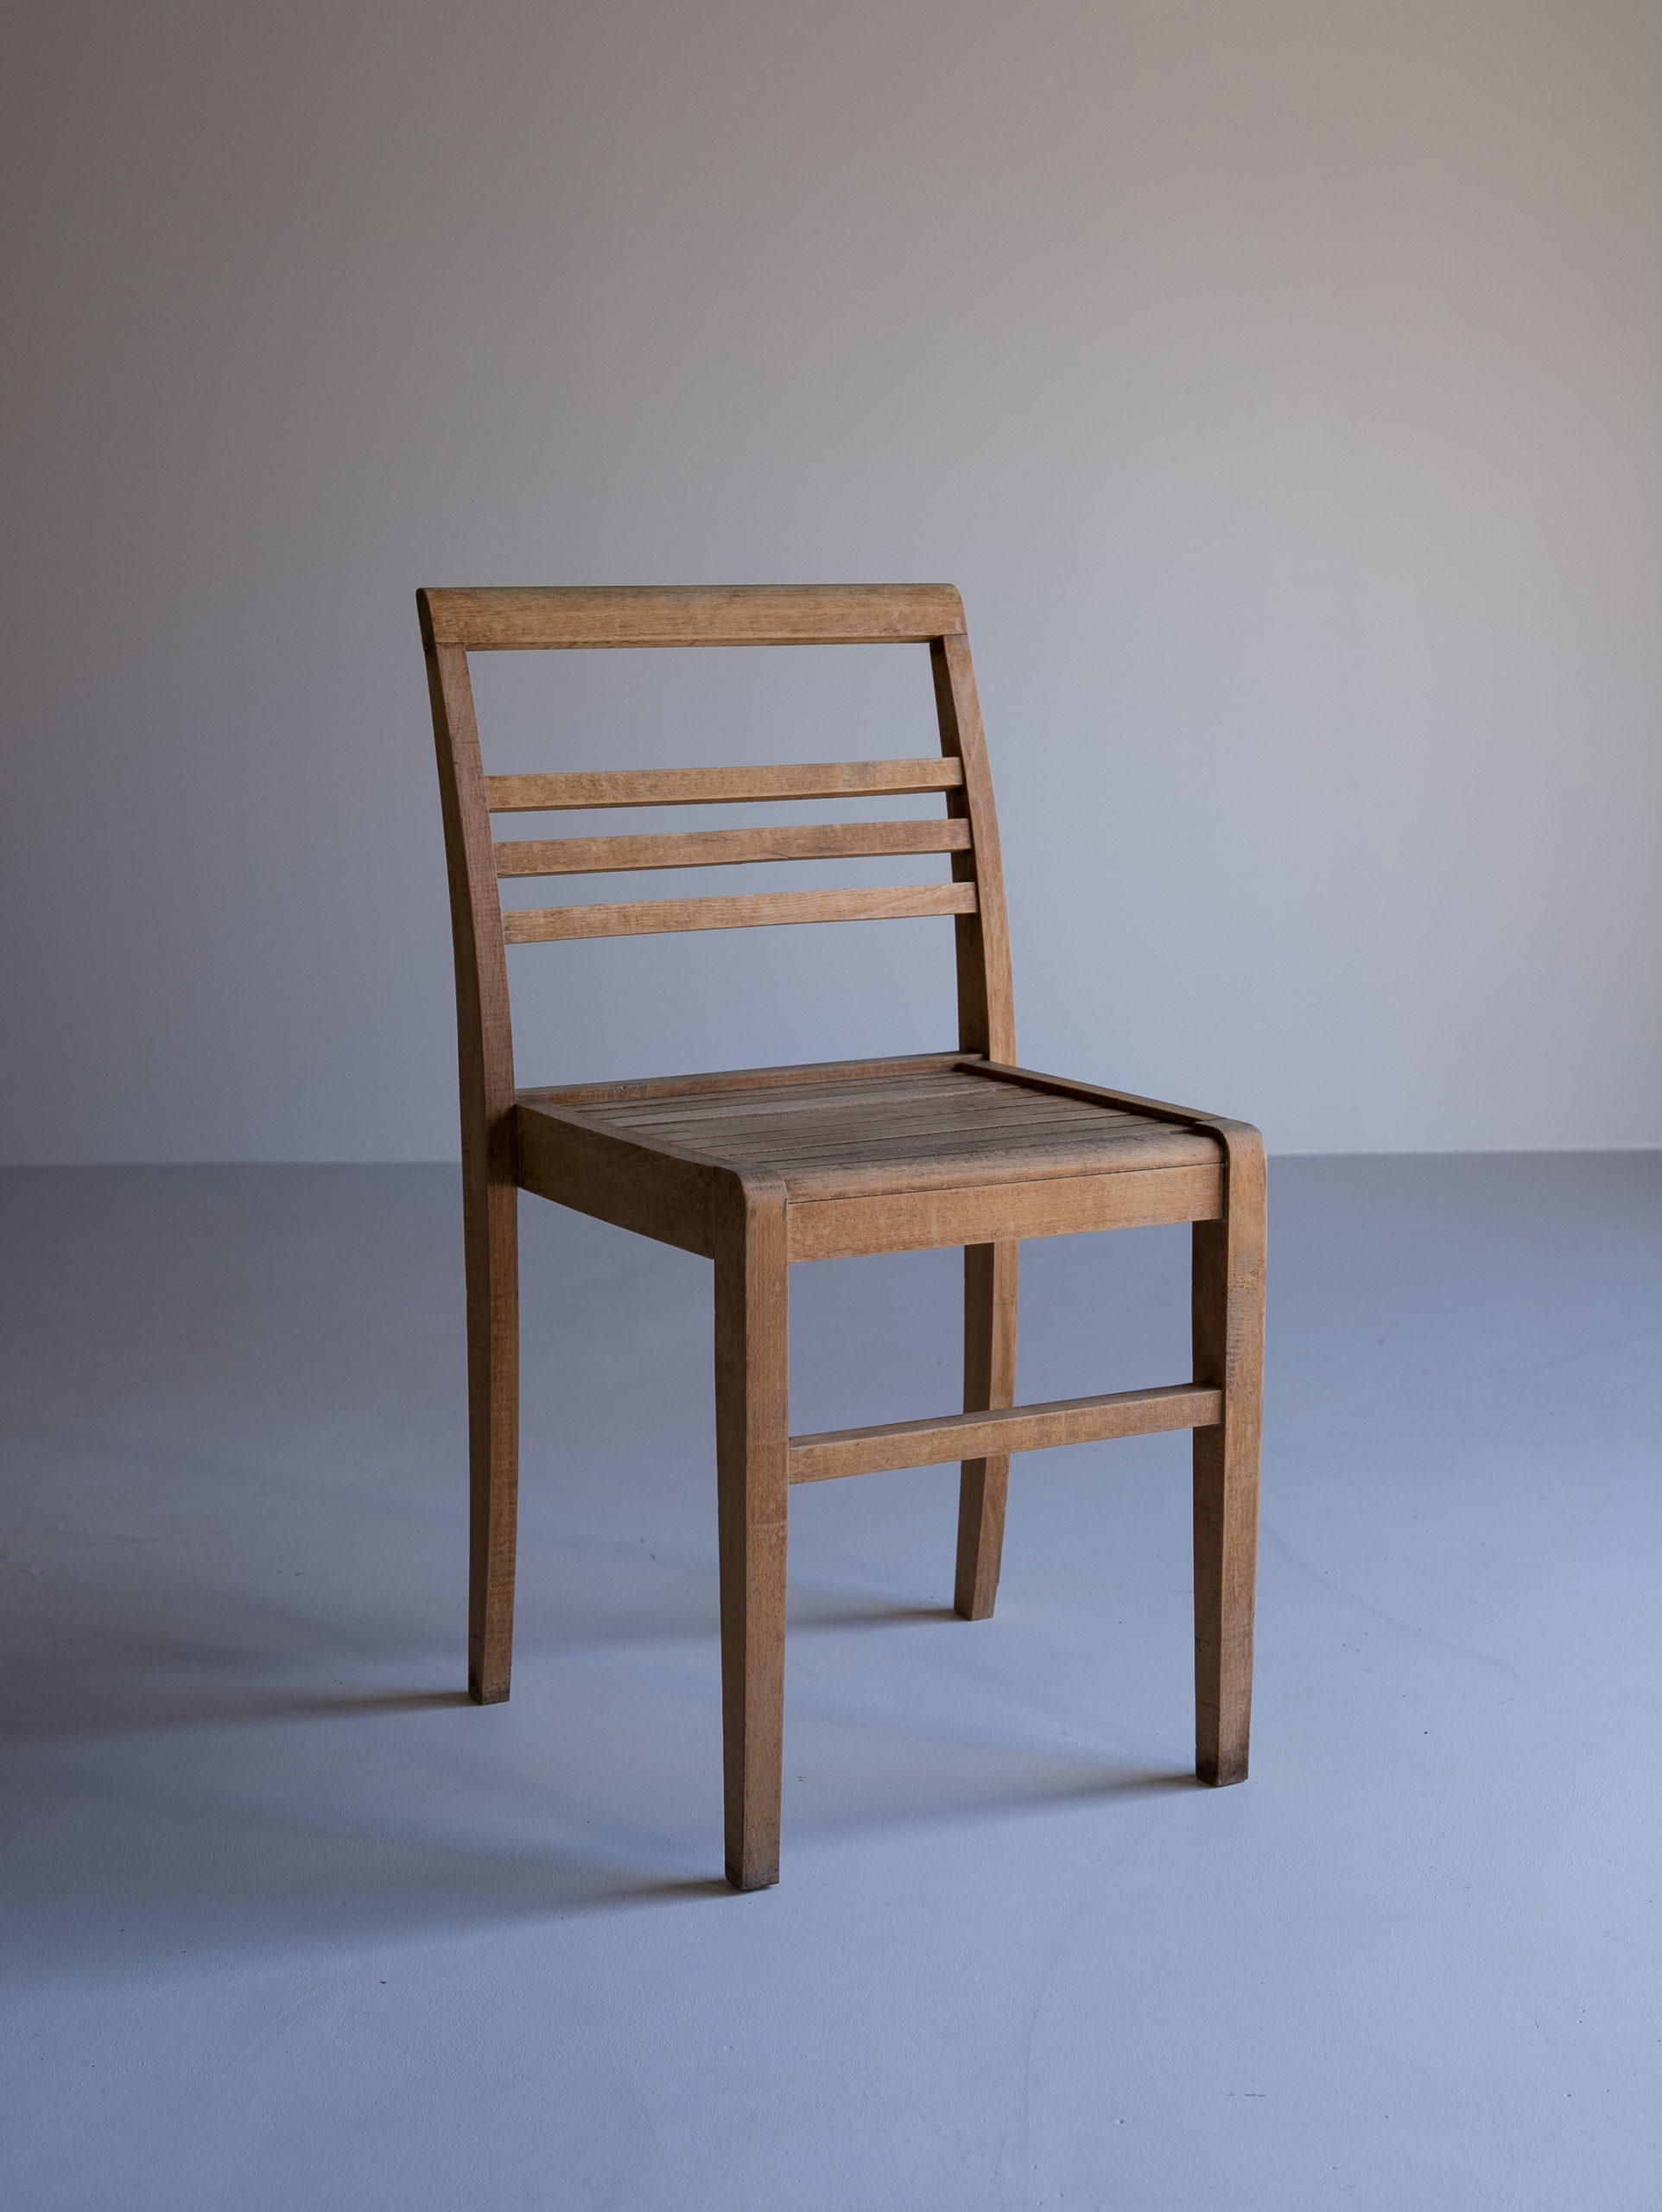 Wood chair by Rene Gabriel